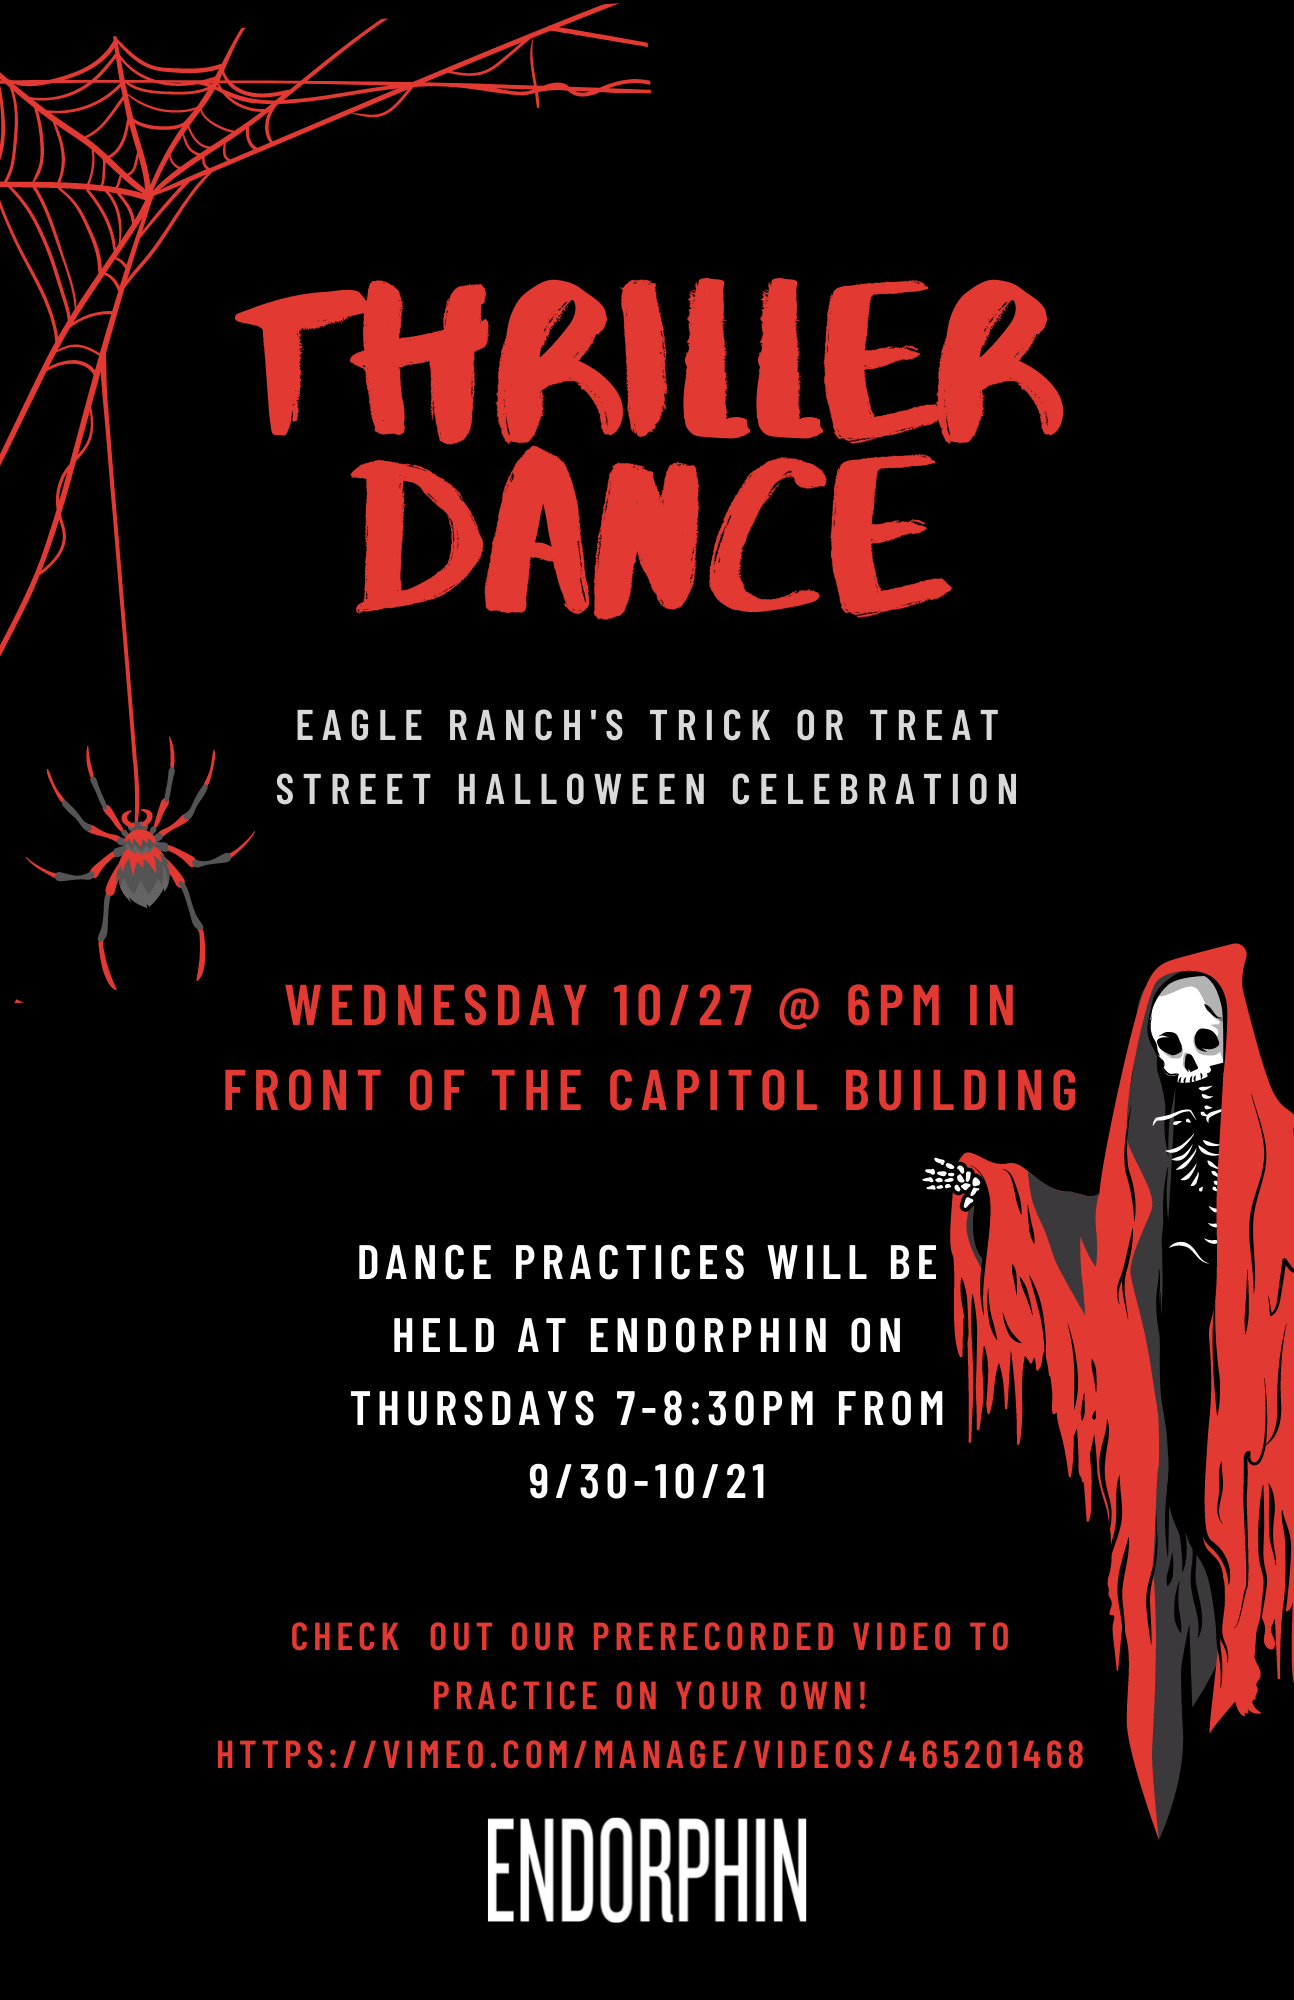 
Thriller Dance - Eagle Ranch's Trick or Treat Street Halloween Celebration